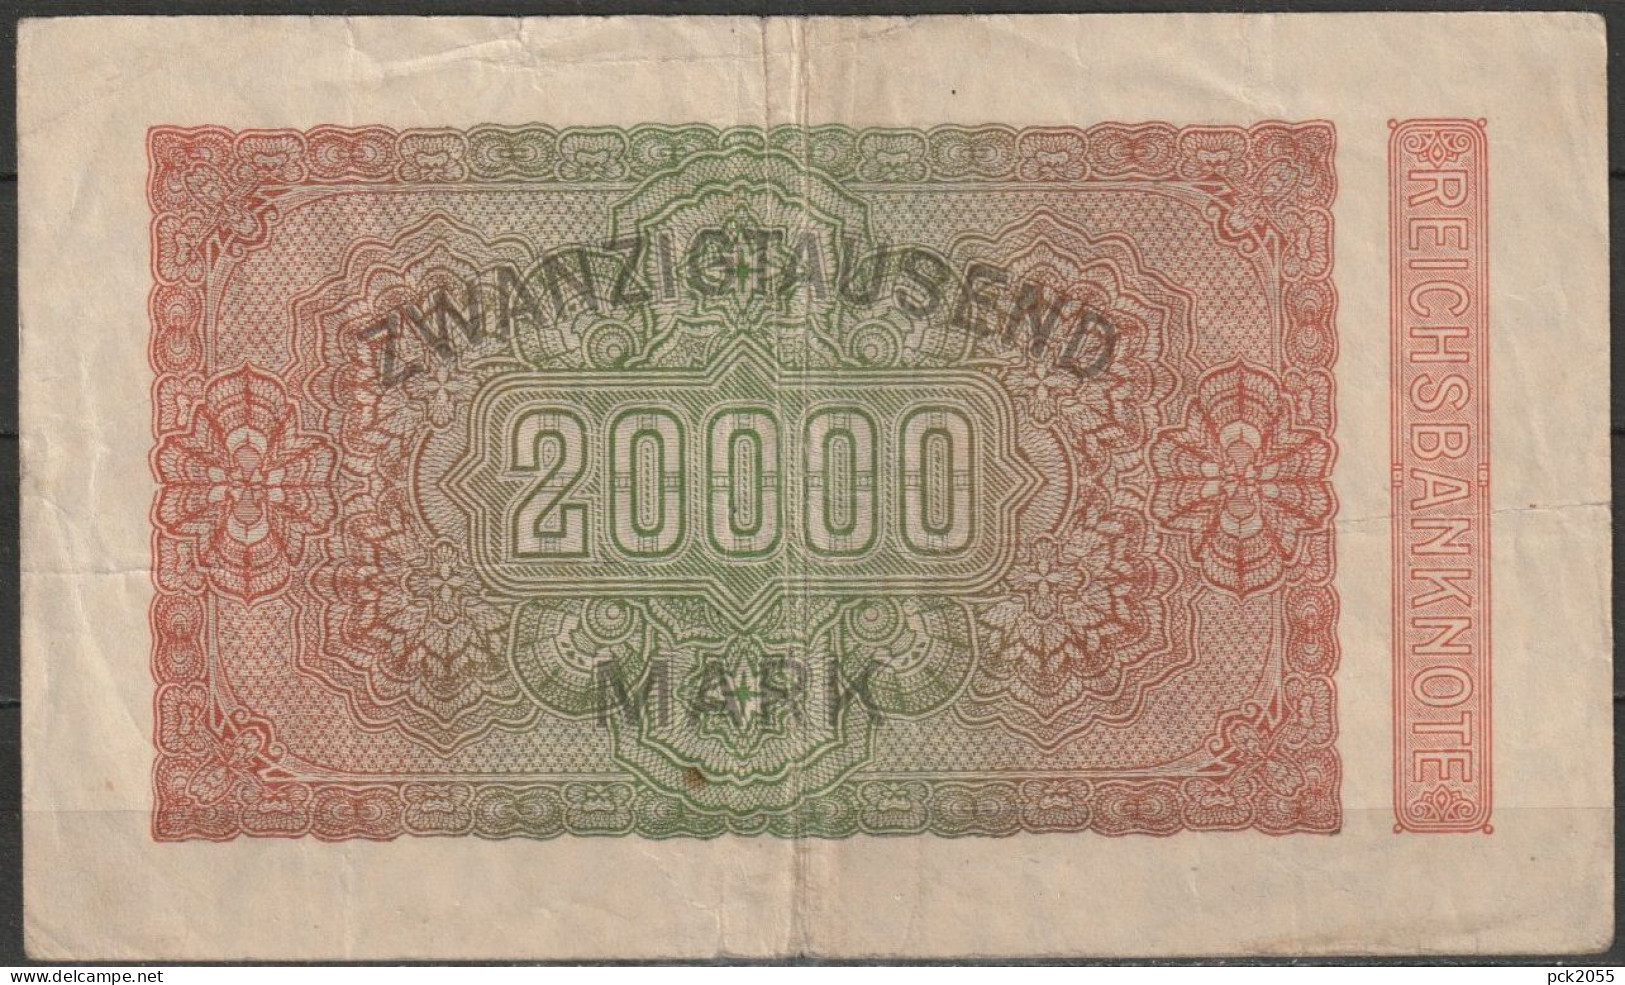 DR.20000 Mark Reichsbanknote 20.2.1923 Ros.Nr.84b, P85 ( D 6481 ) - 20.000 Mark